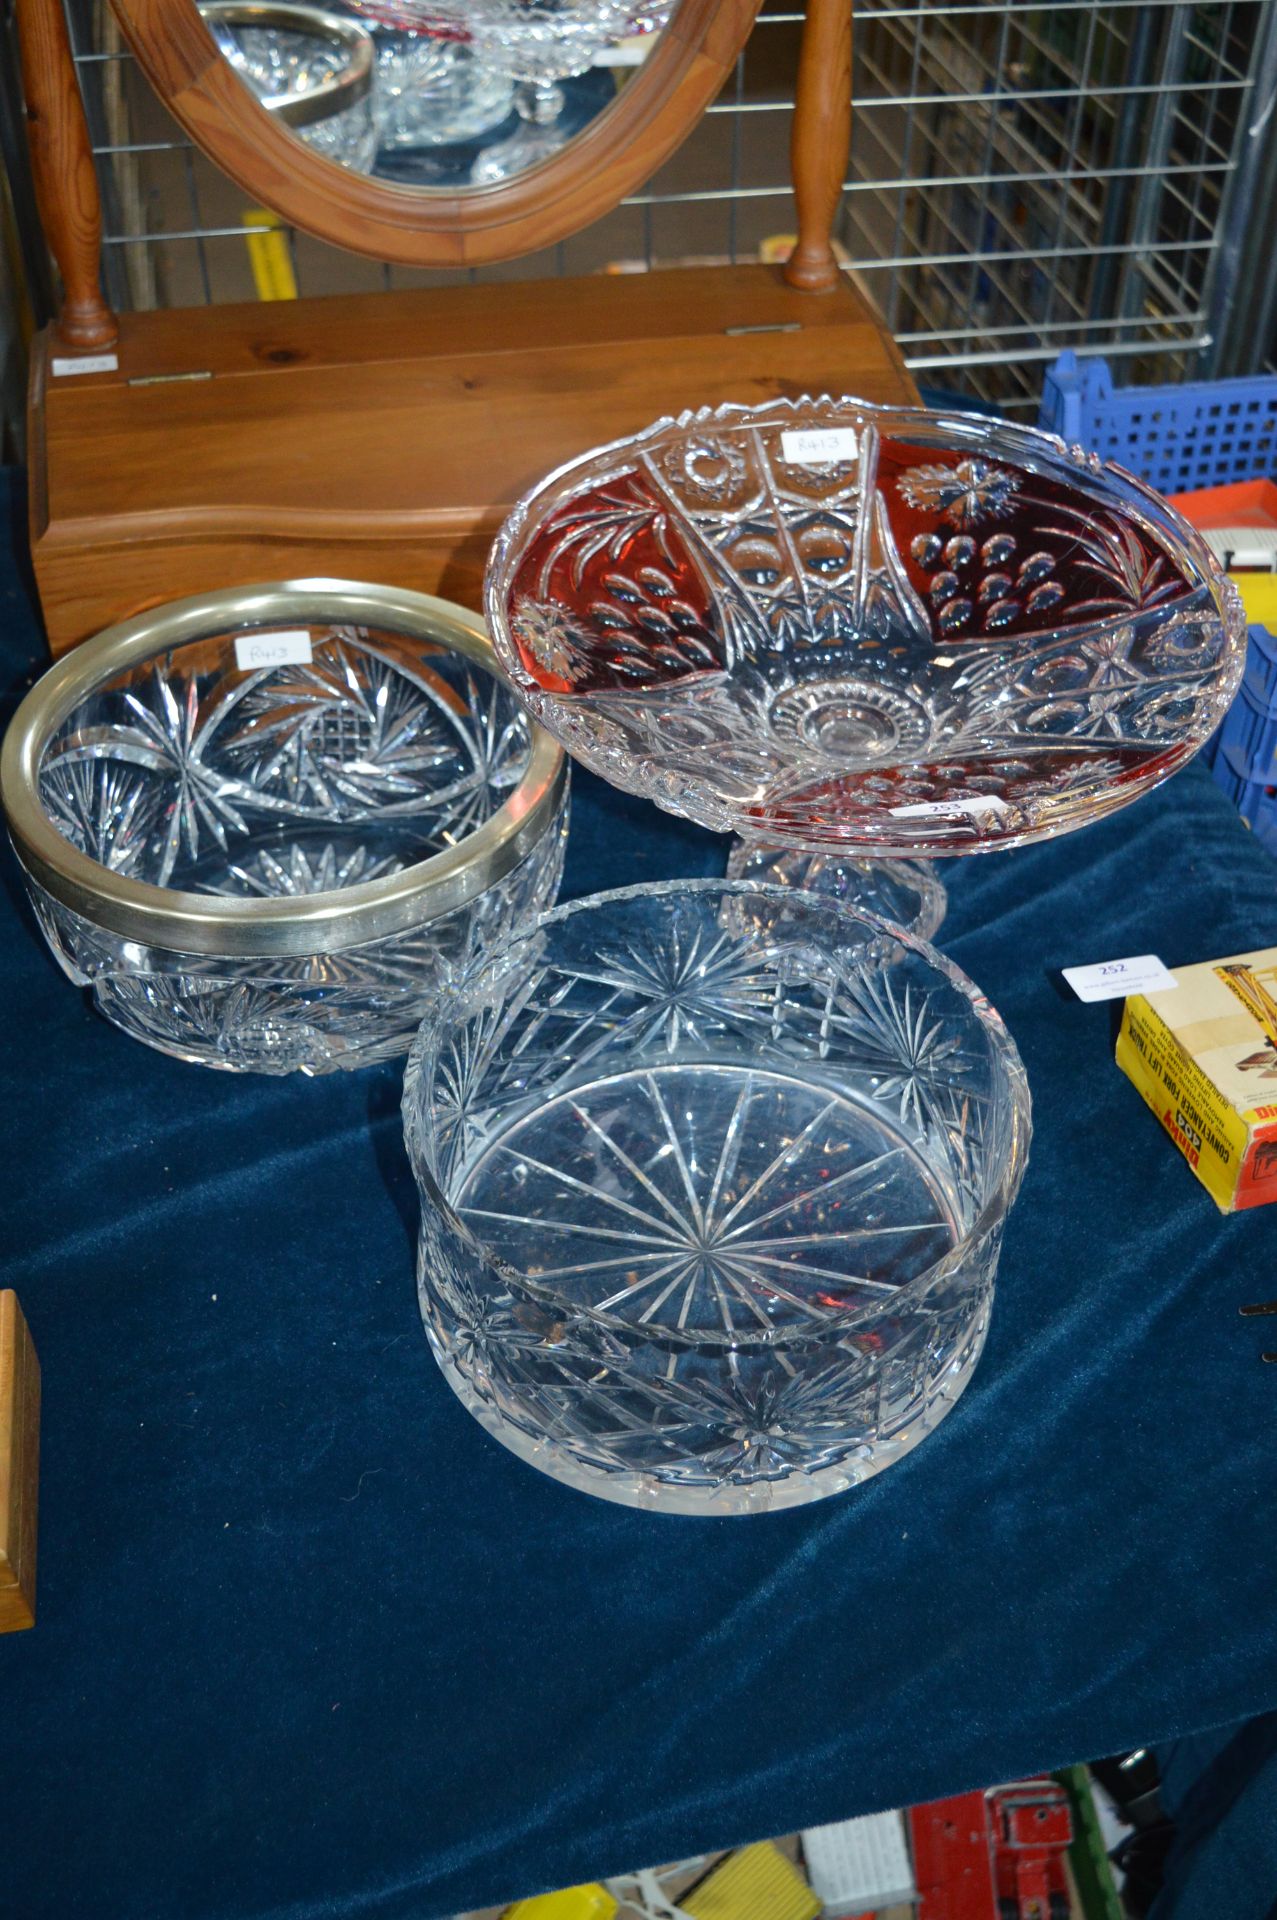 Three Glass Bowls